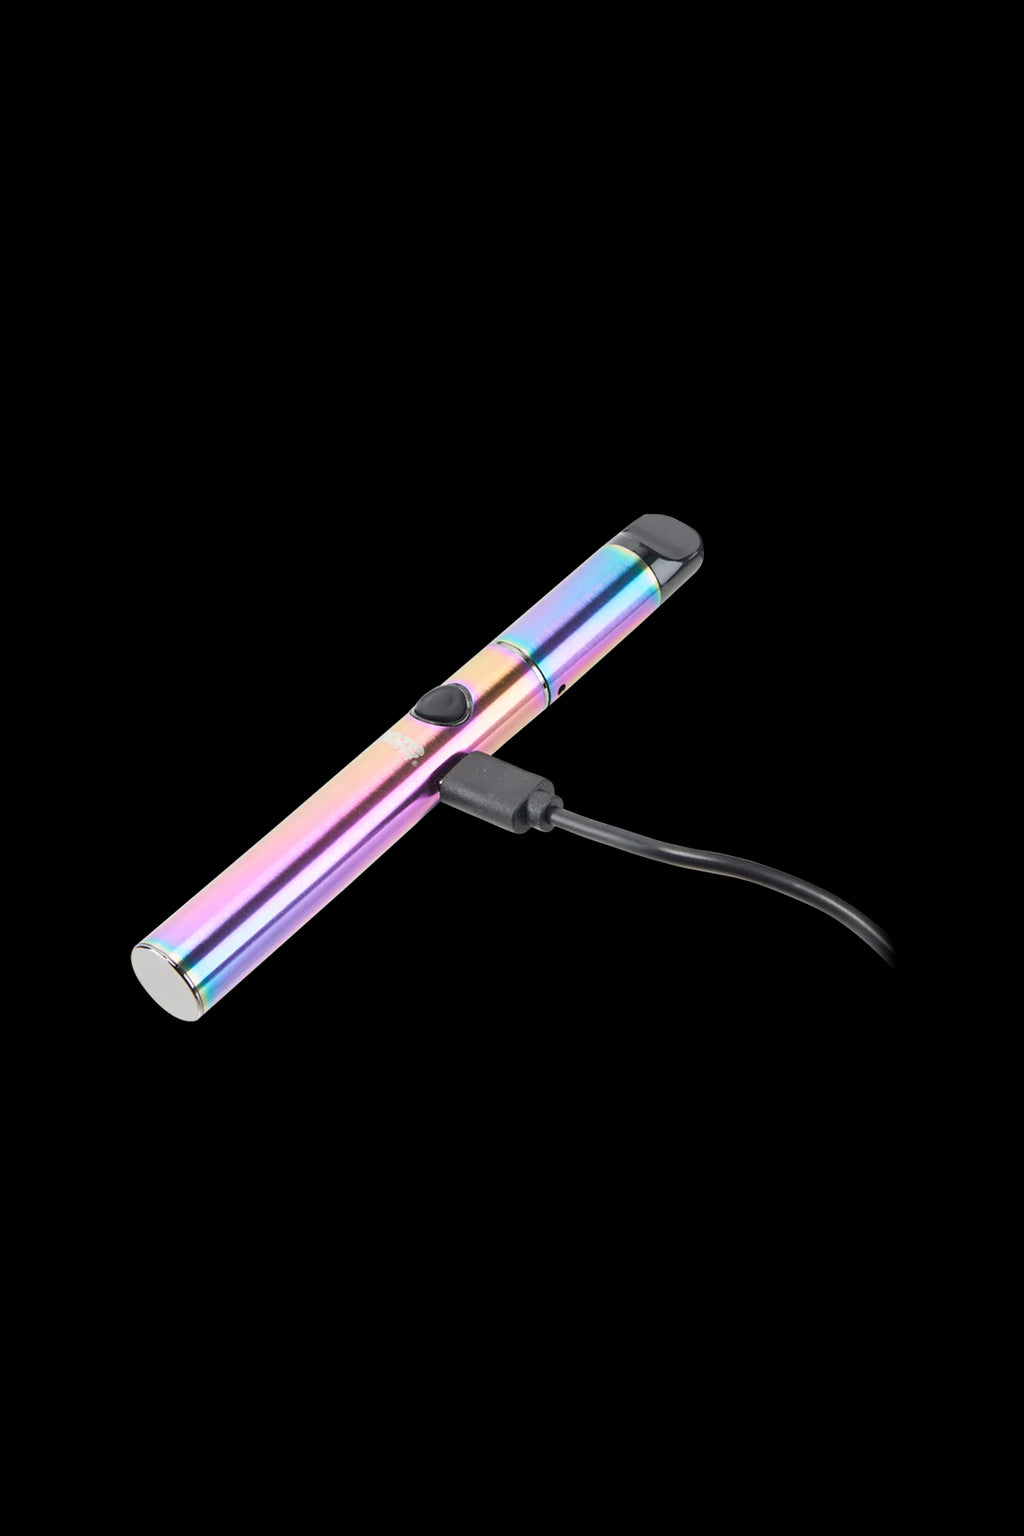 Ooze Signal Concentrate Vaporizer Pen - Rainbow